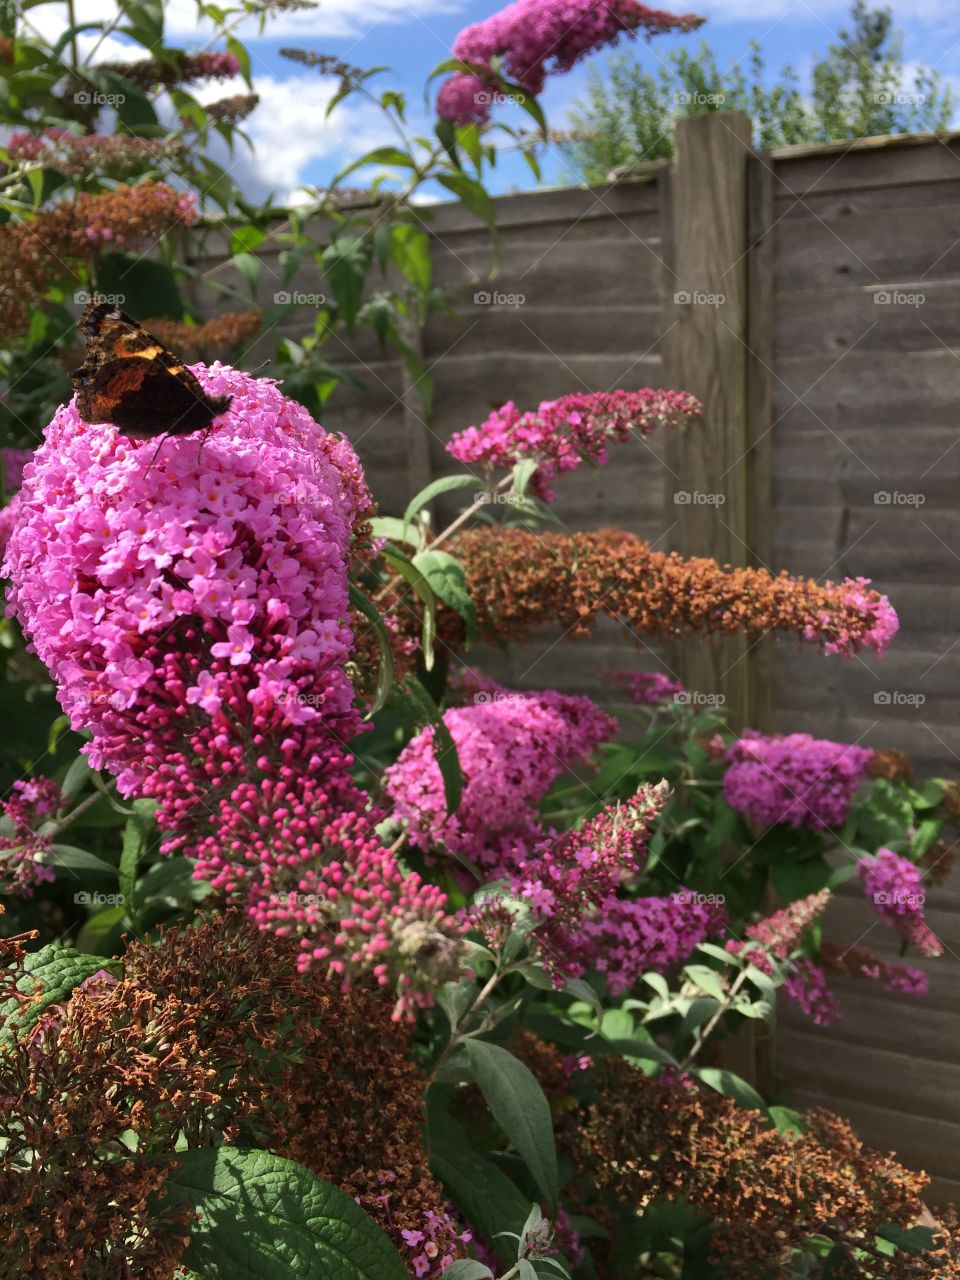 Butterfly on pink flowers. Butterfly on pink garden flowers